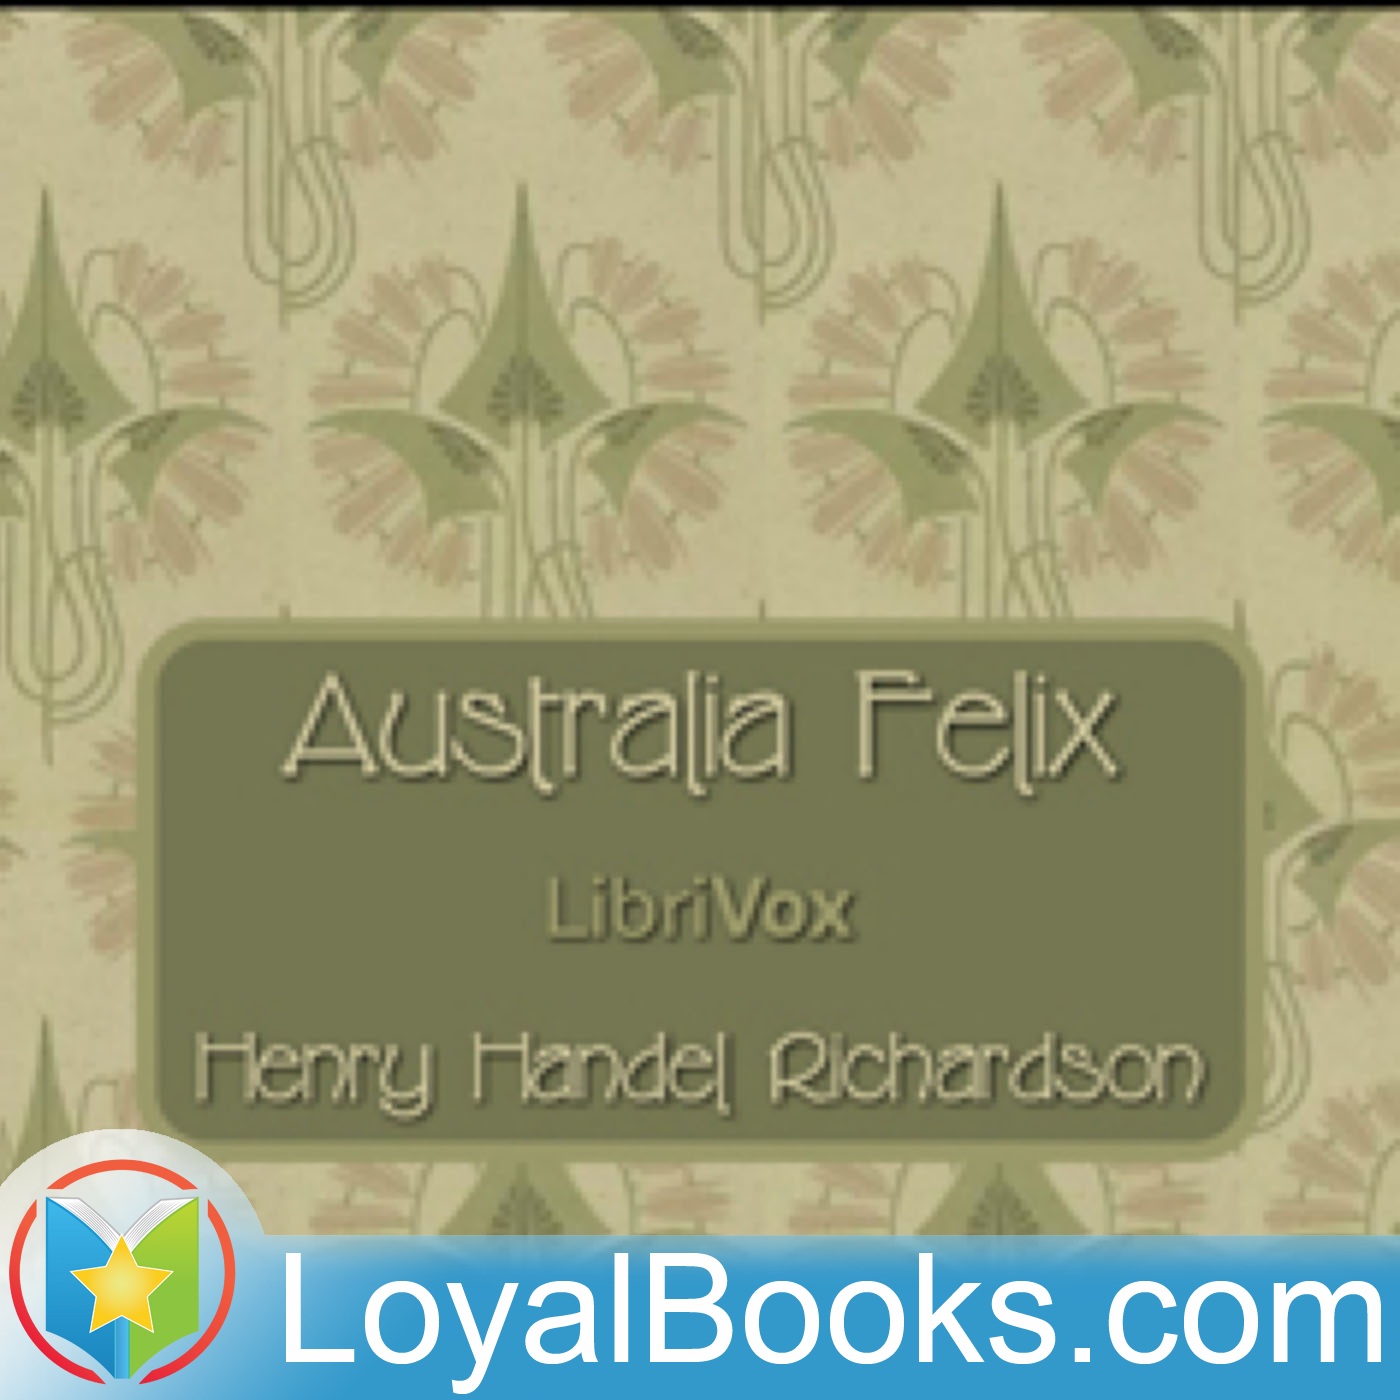 Australia Felix by Henry Handel Richardson